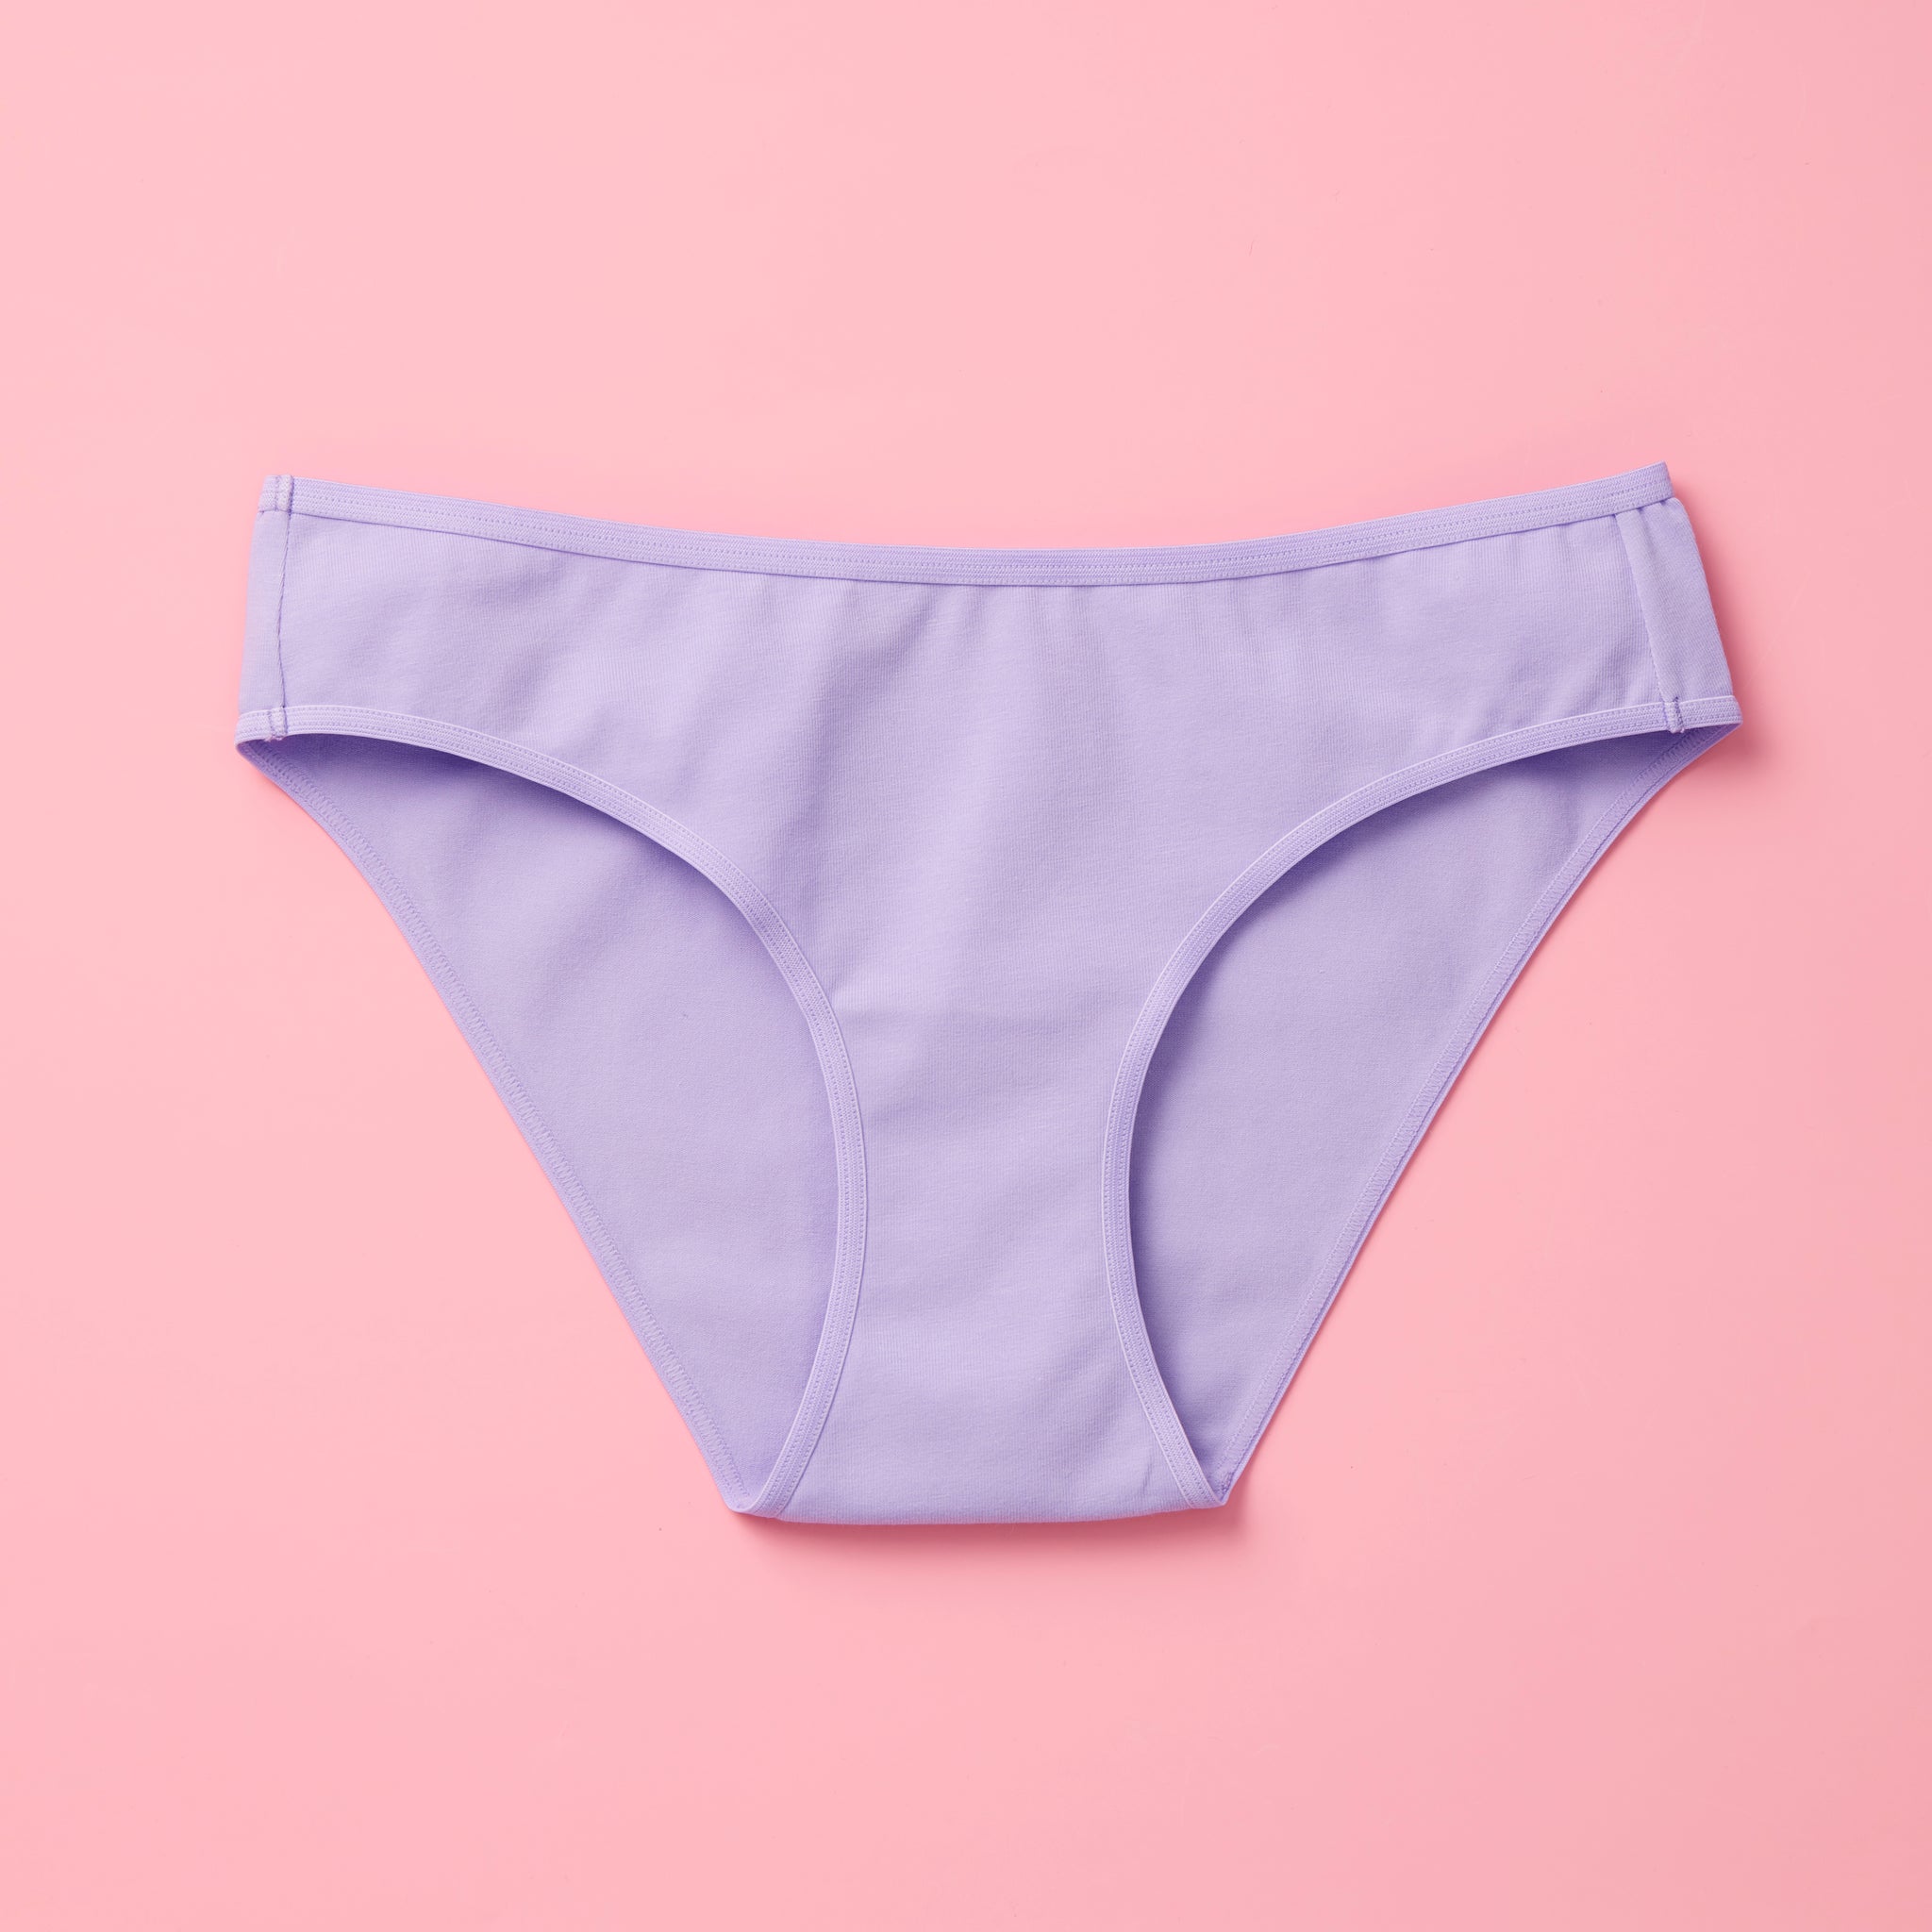 Yellowberry® Girls 6PK High Quality Pima Cotton Super Soft Bikini